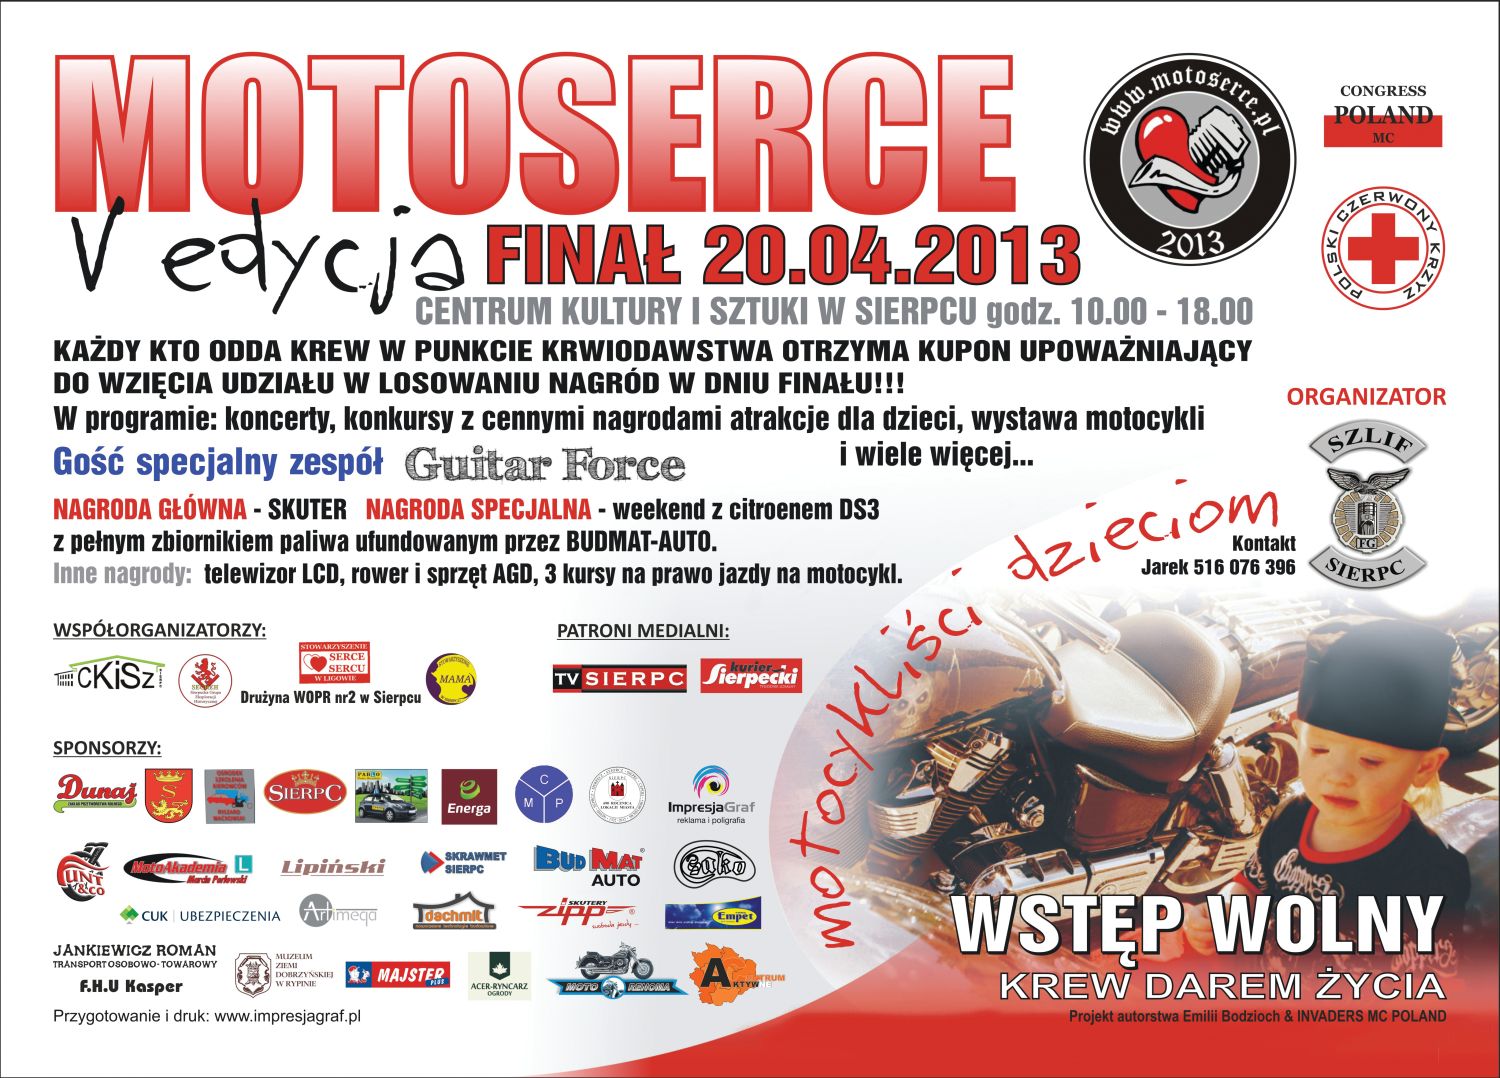 Motoserce 2013 - V edycja